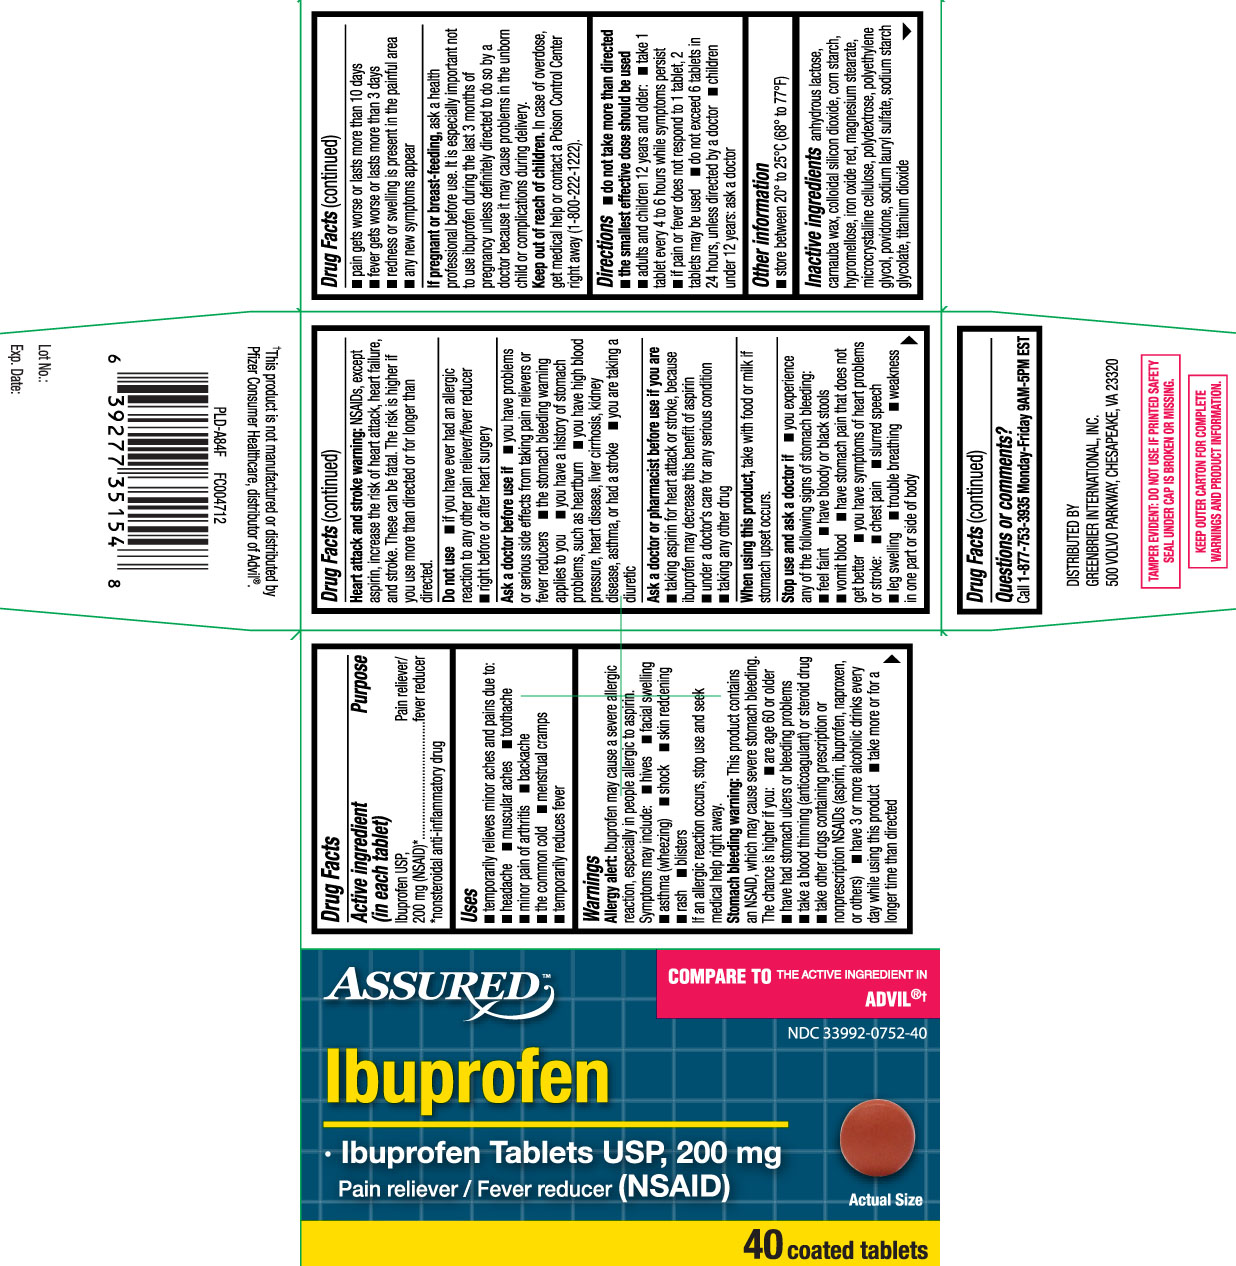 Ibuprofen USP, 200 mg (NSAID)* *nonsteroidal anti-inflammatory drug